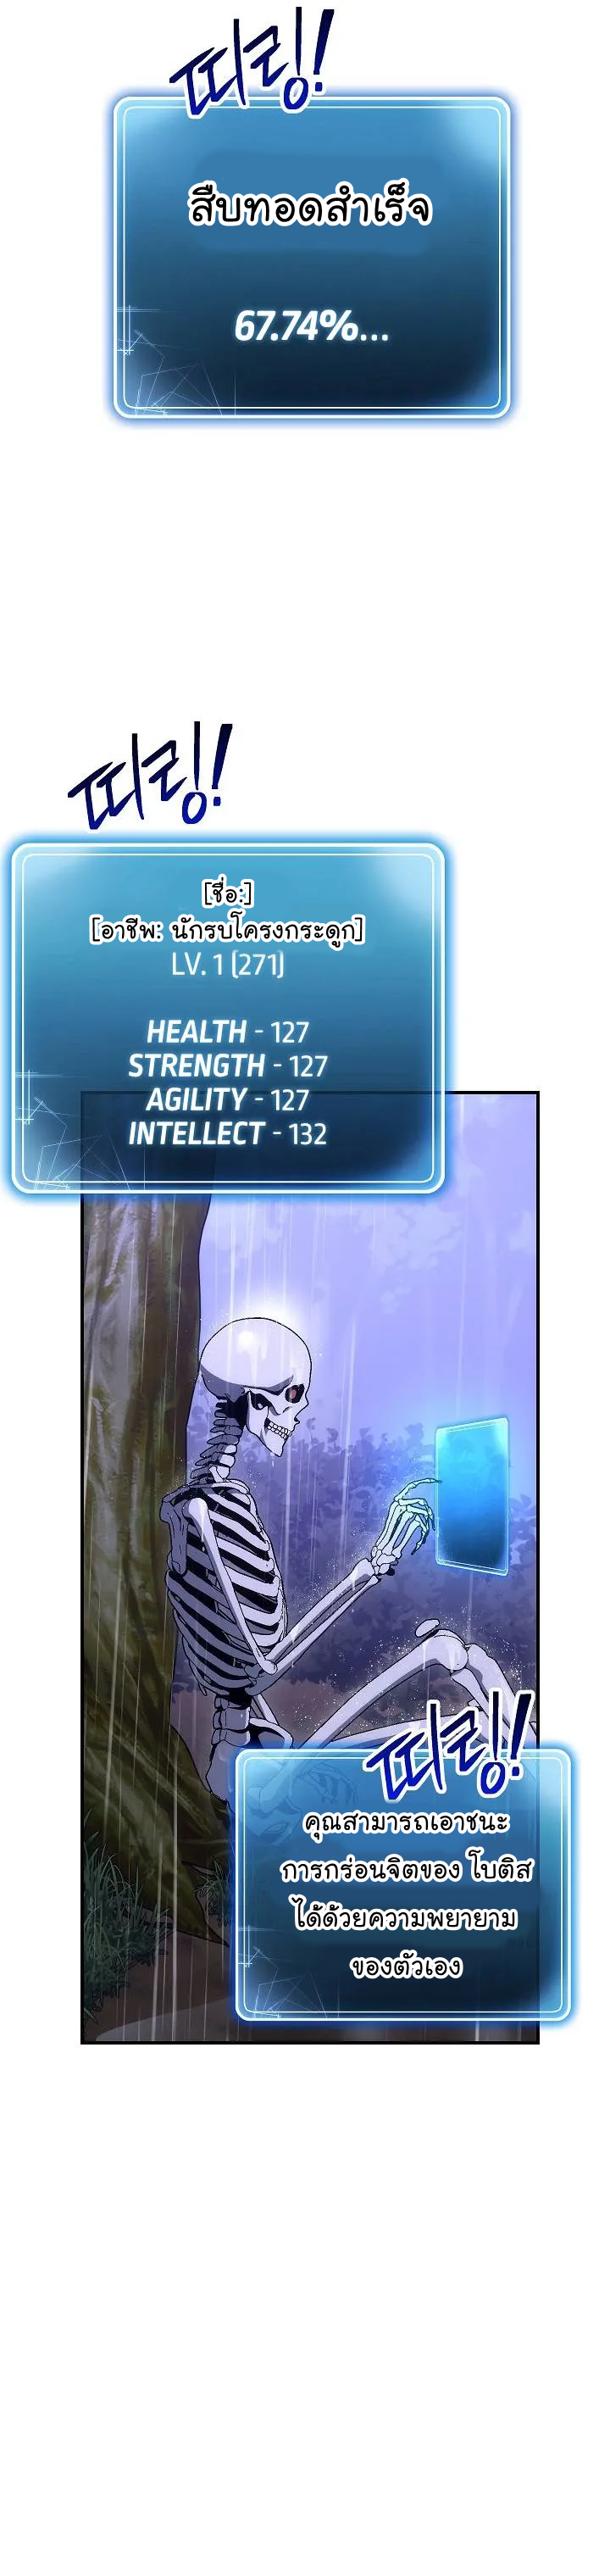 Skeleton Soldier 154 13